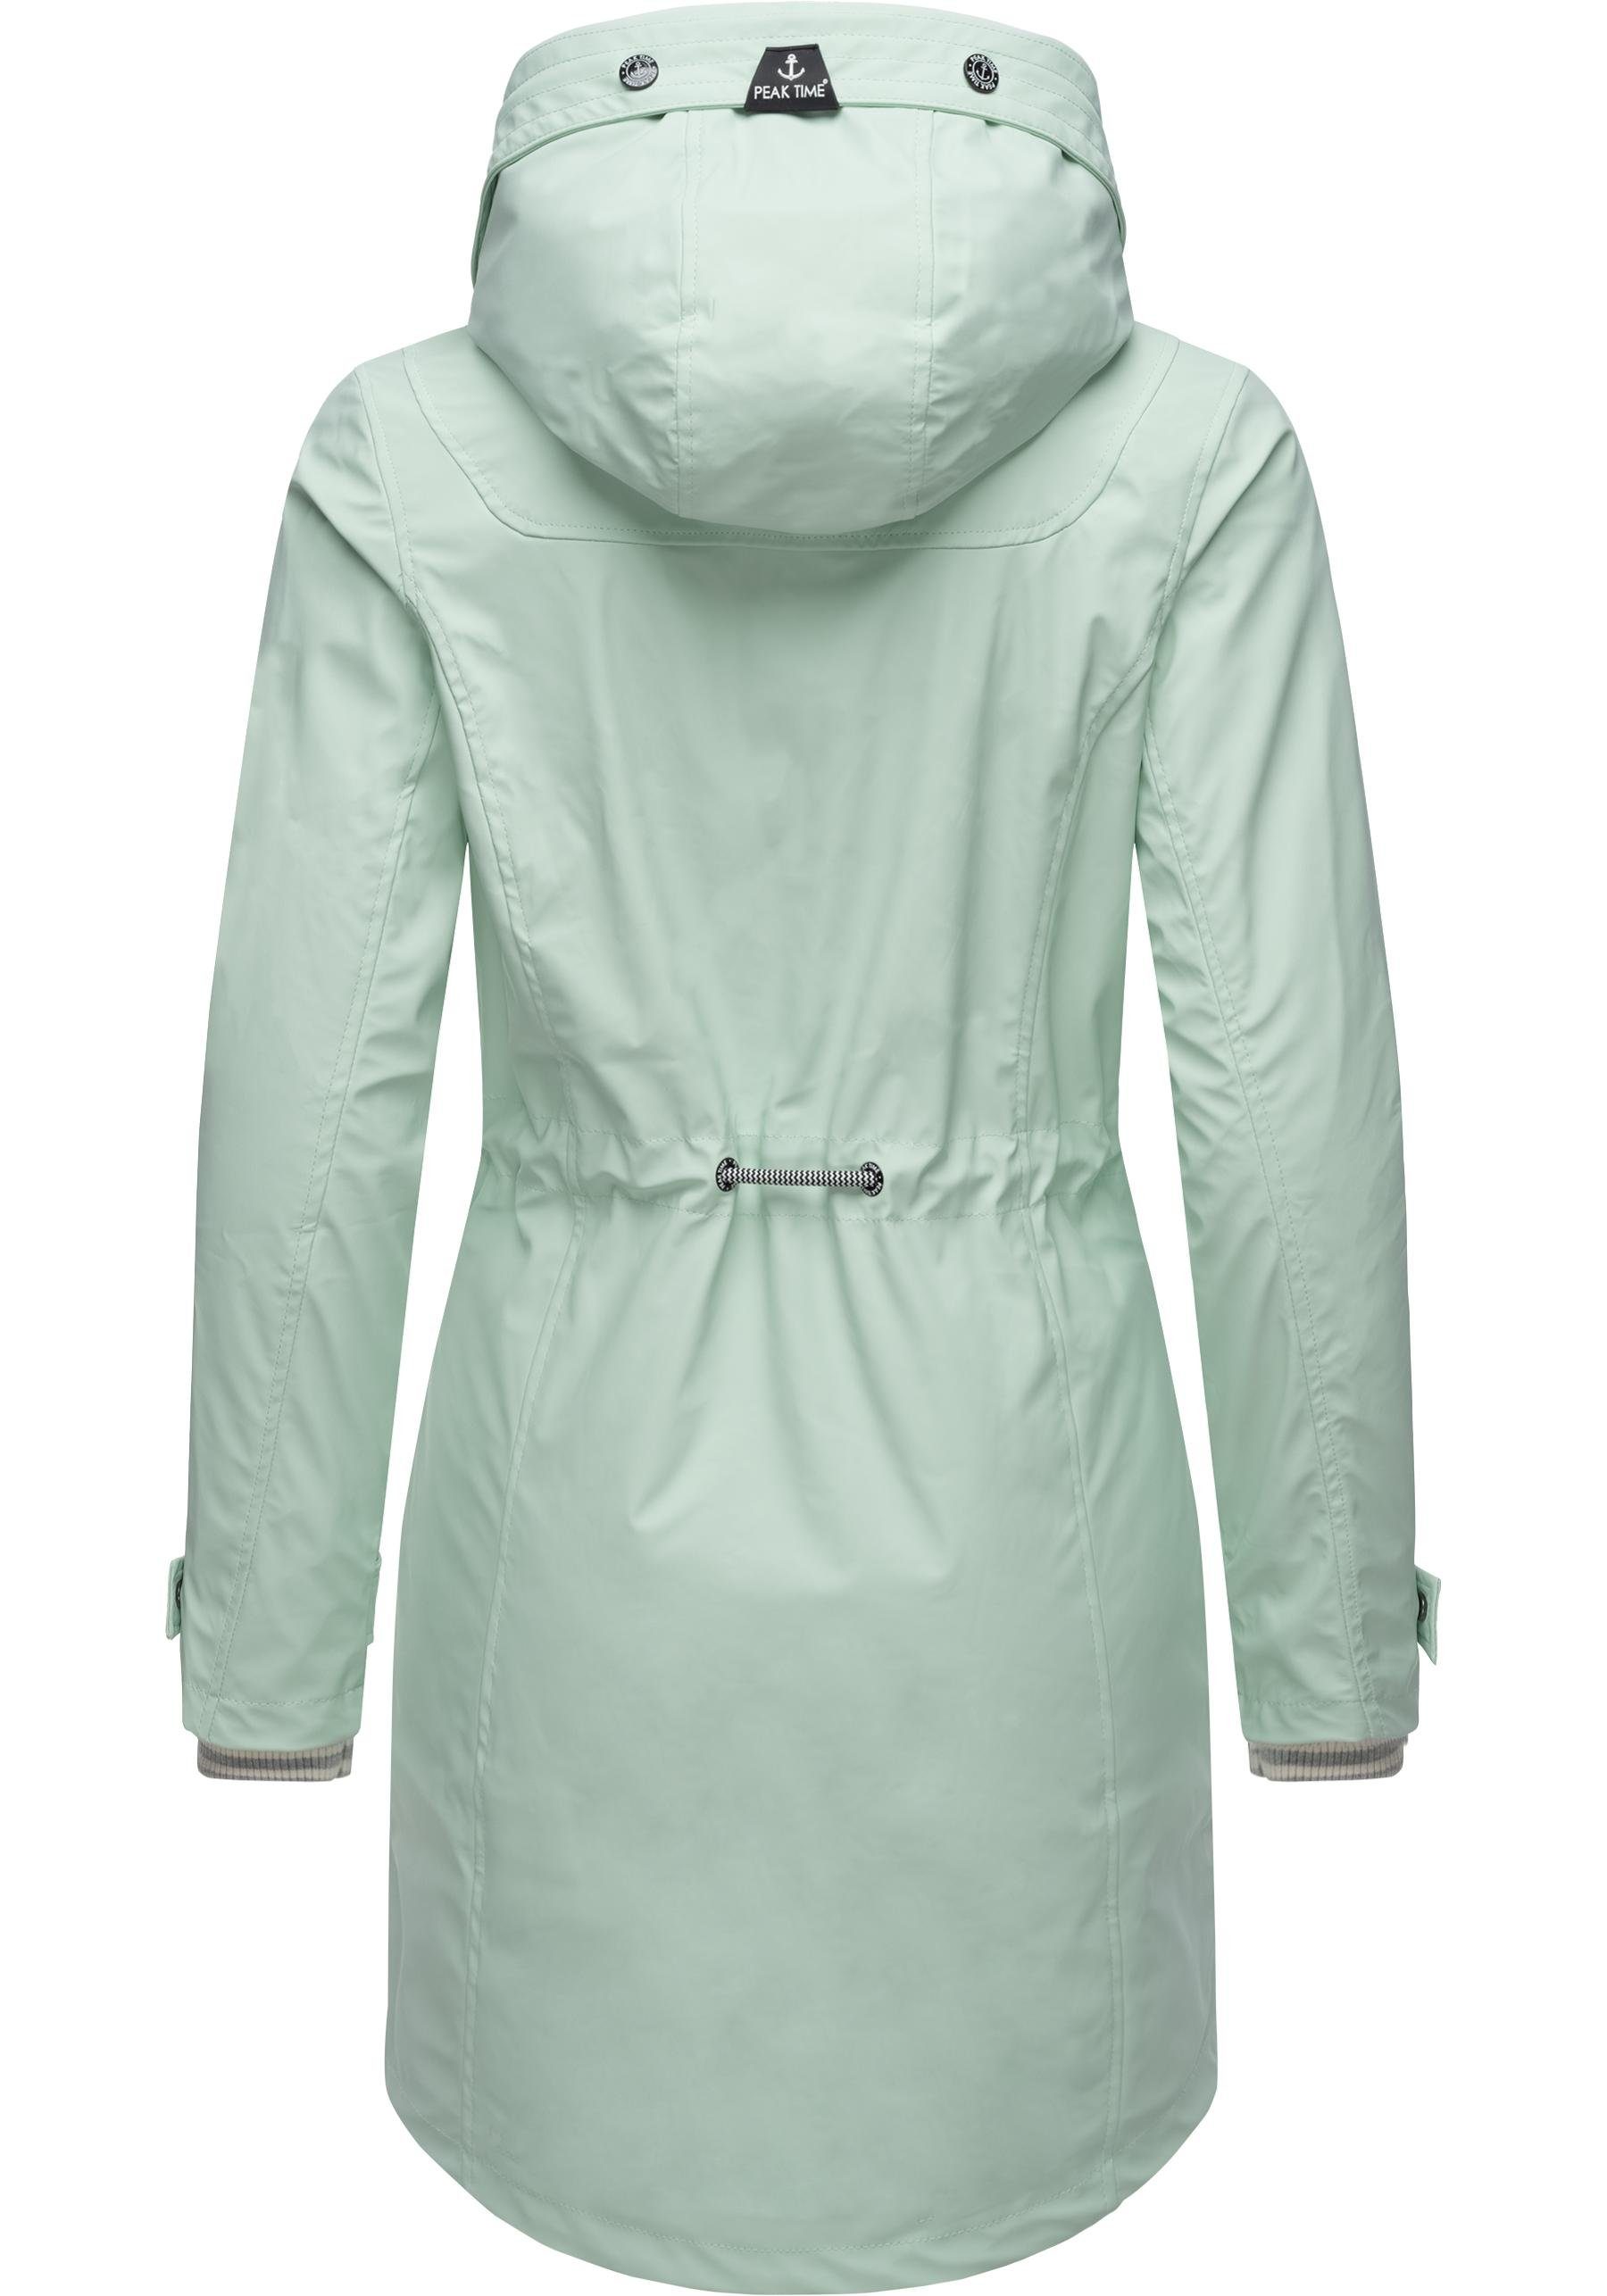 PEAK TIME Regenjacke L60042 Damen Regenmantel taillierter mint für stylisch